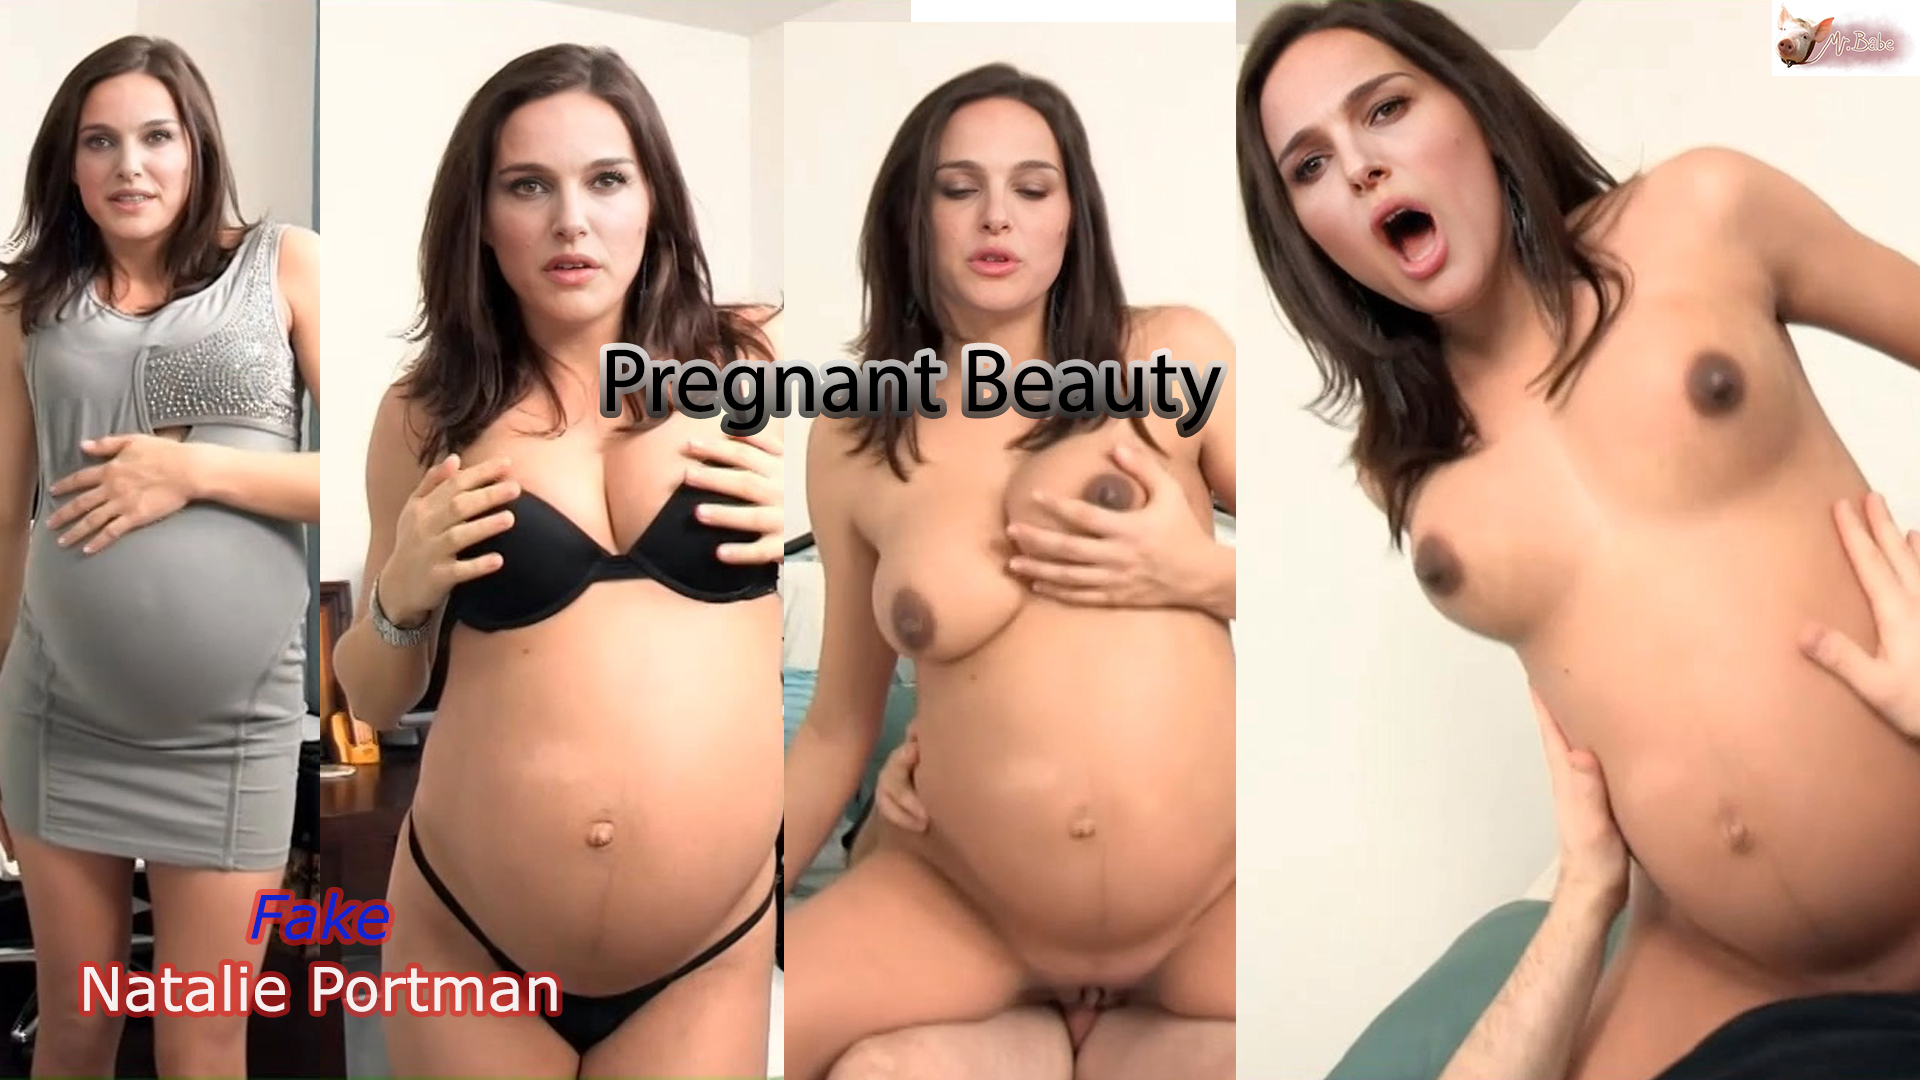 Fake Natalie Portman -(trailer) -405 -Pregnant Beauty-